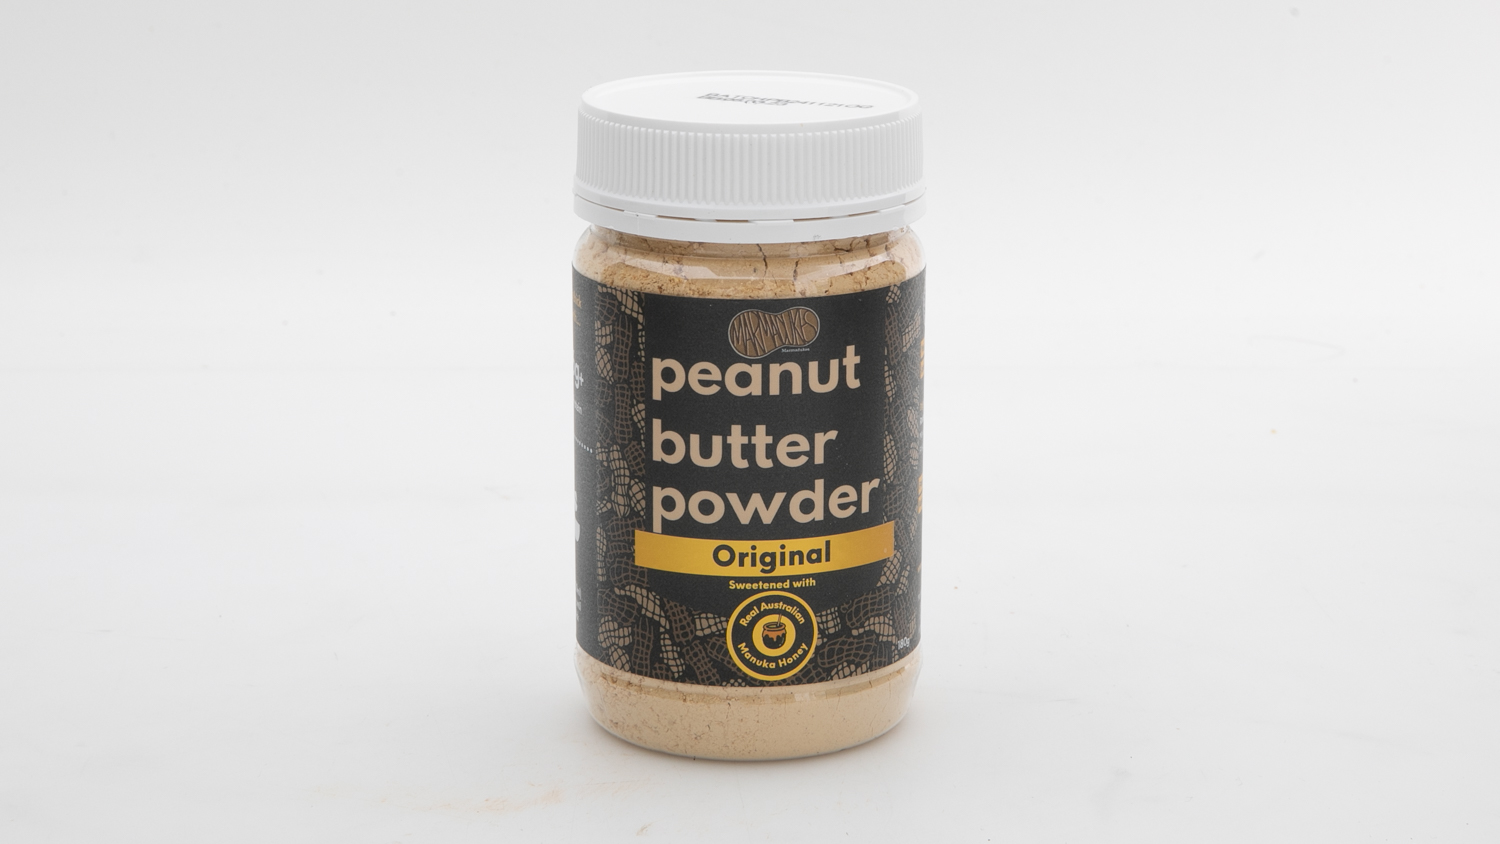 Marmadukes Powdered Peanut Butter carousel image